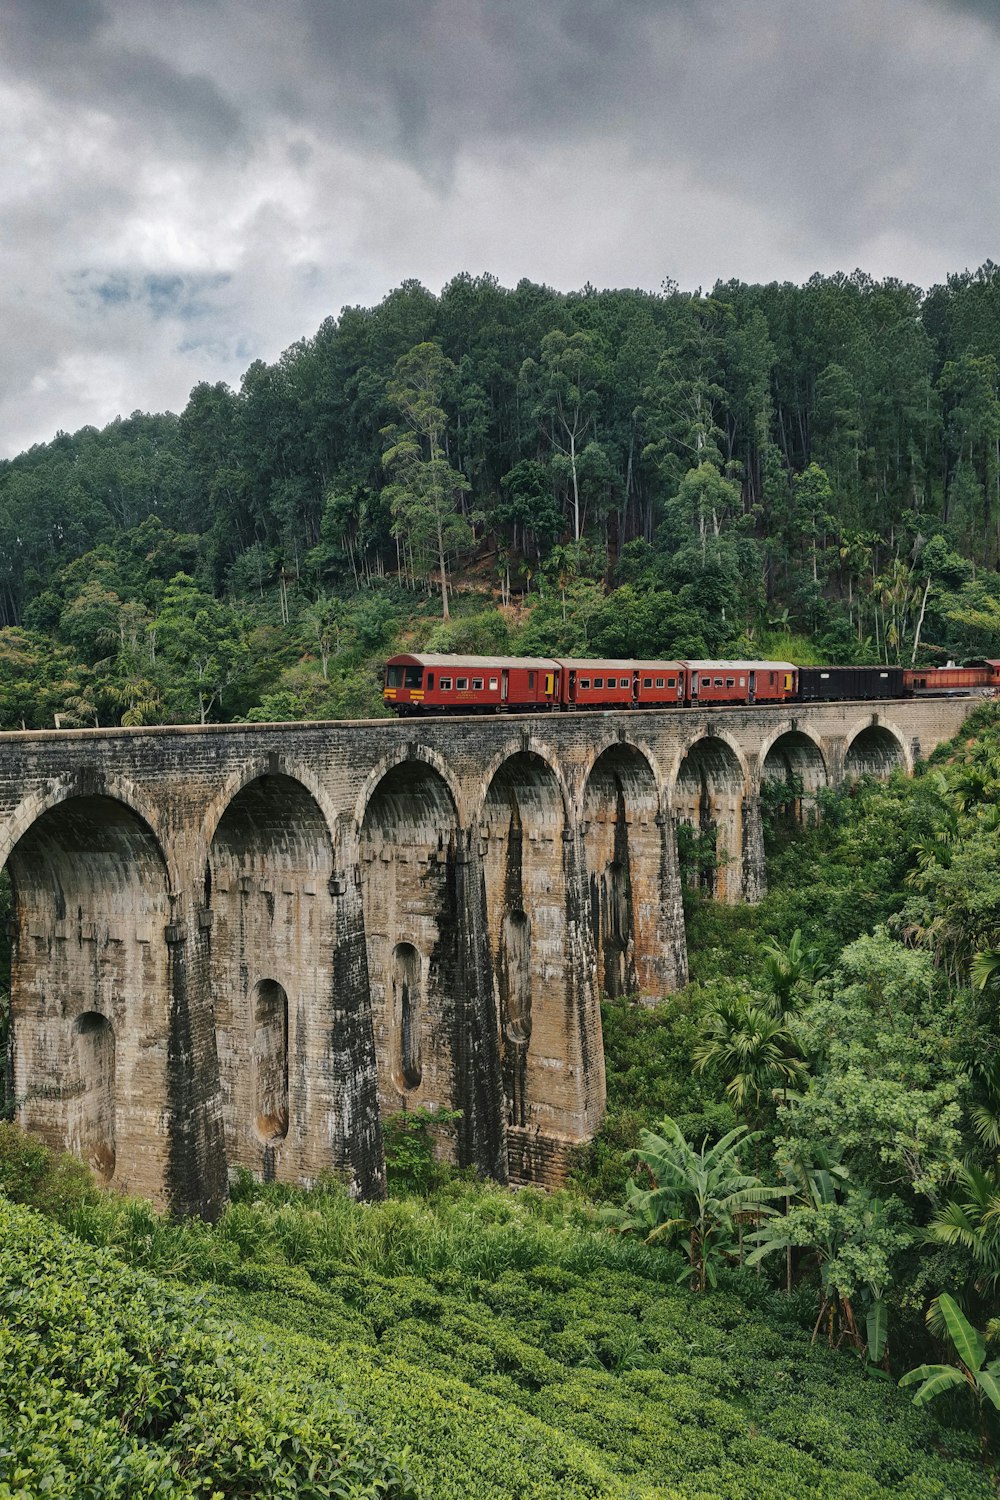 train on bridge in forest